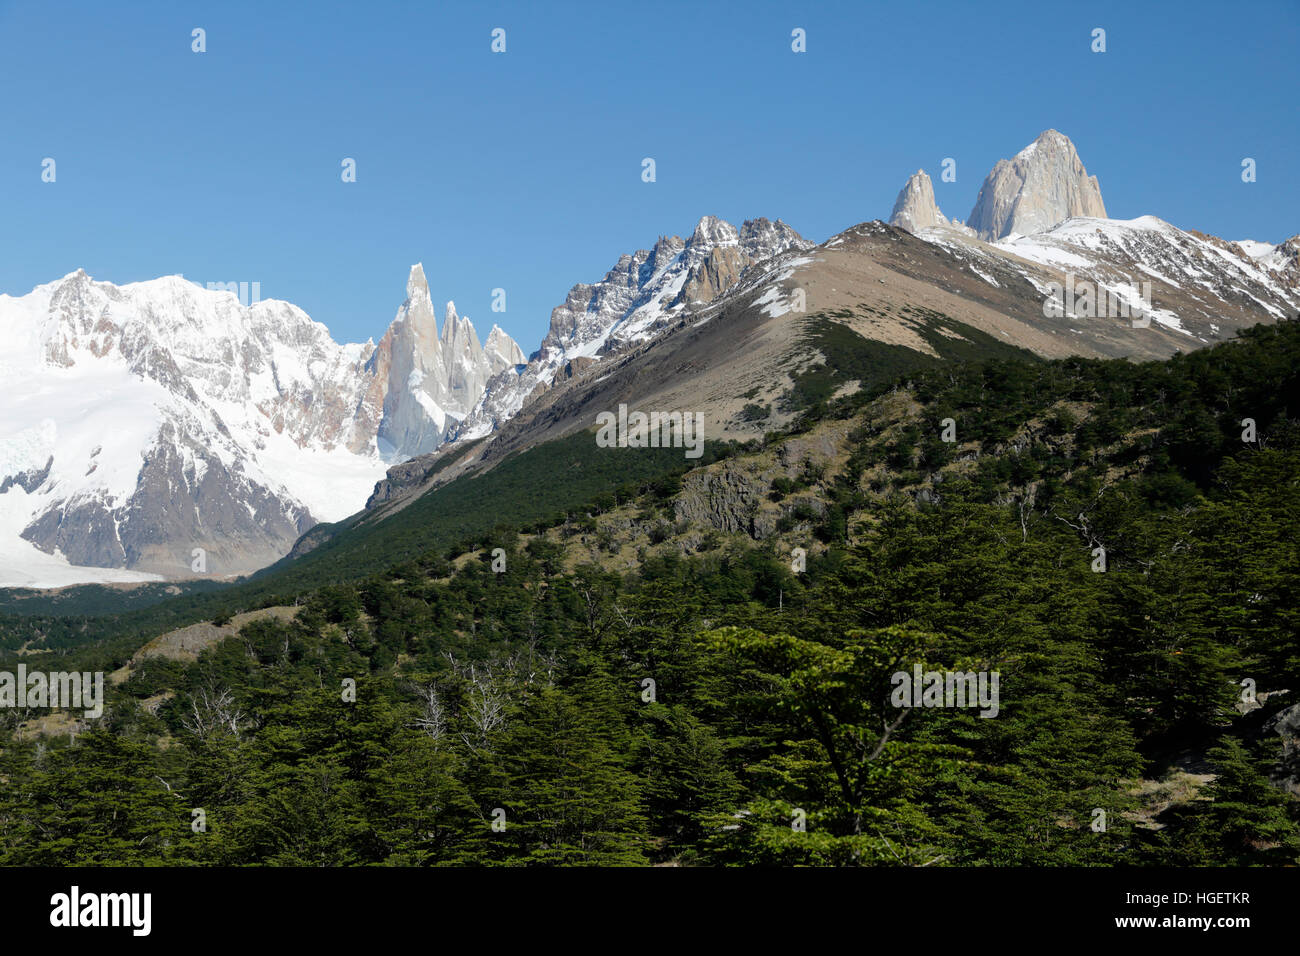 View of Cerro Torre and Mount Fitz Roy from Mirador del Cerro Torre, El Chalten, Patagonia, Argentina, South America Stock Photo